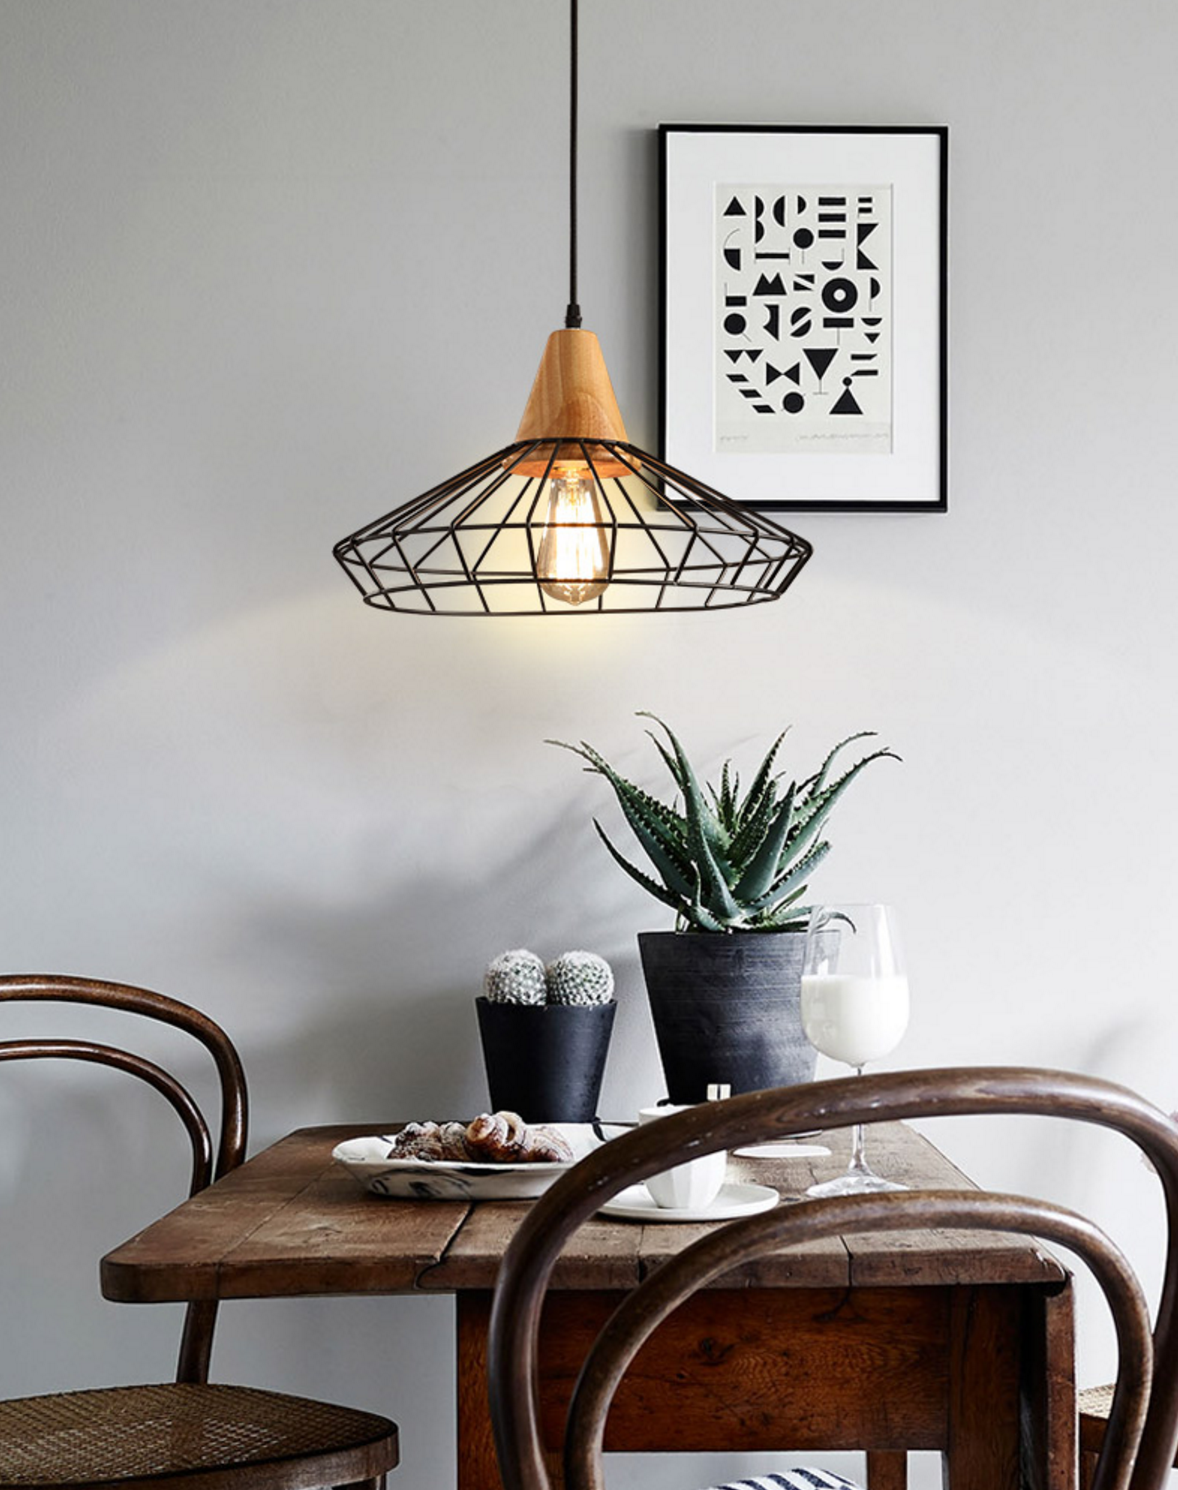 Sangkar Metal Cage Pendant Light With Wood Base model A dining room